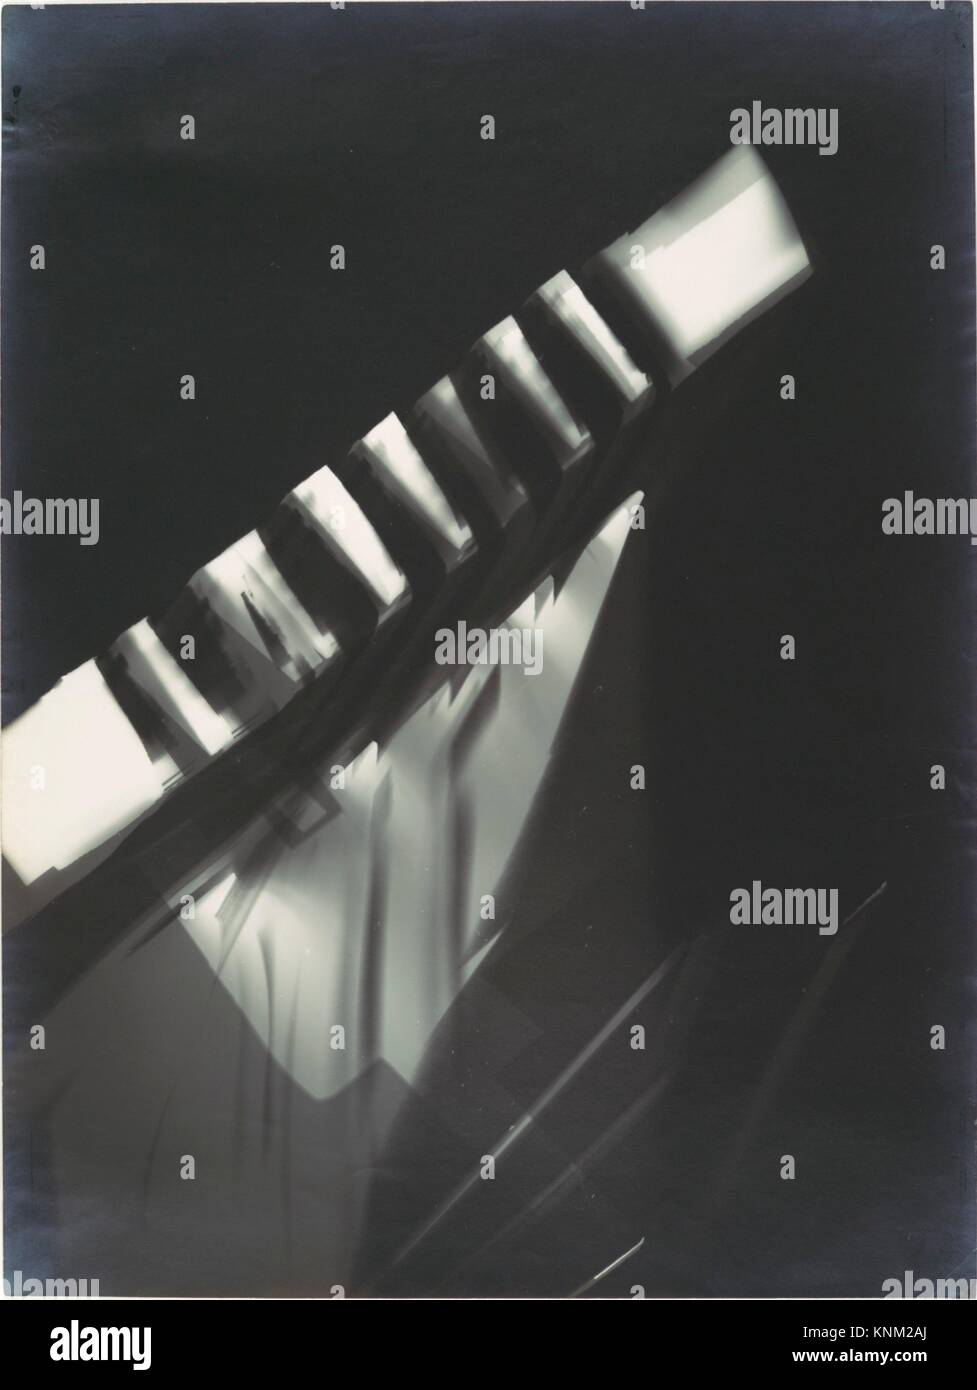 Fotogramm. Artist: Lószló Moholy-Nagy (American (born Hungary), Borsod 1895-1946 Chicago, Illinois); Date: 1925-1928; Medium: Gelatin silver print; Stock Photo